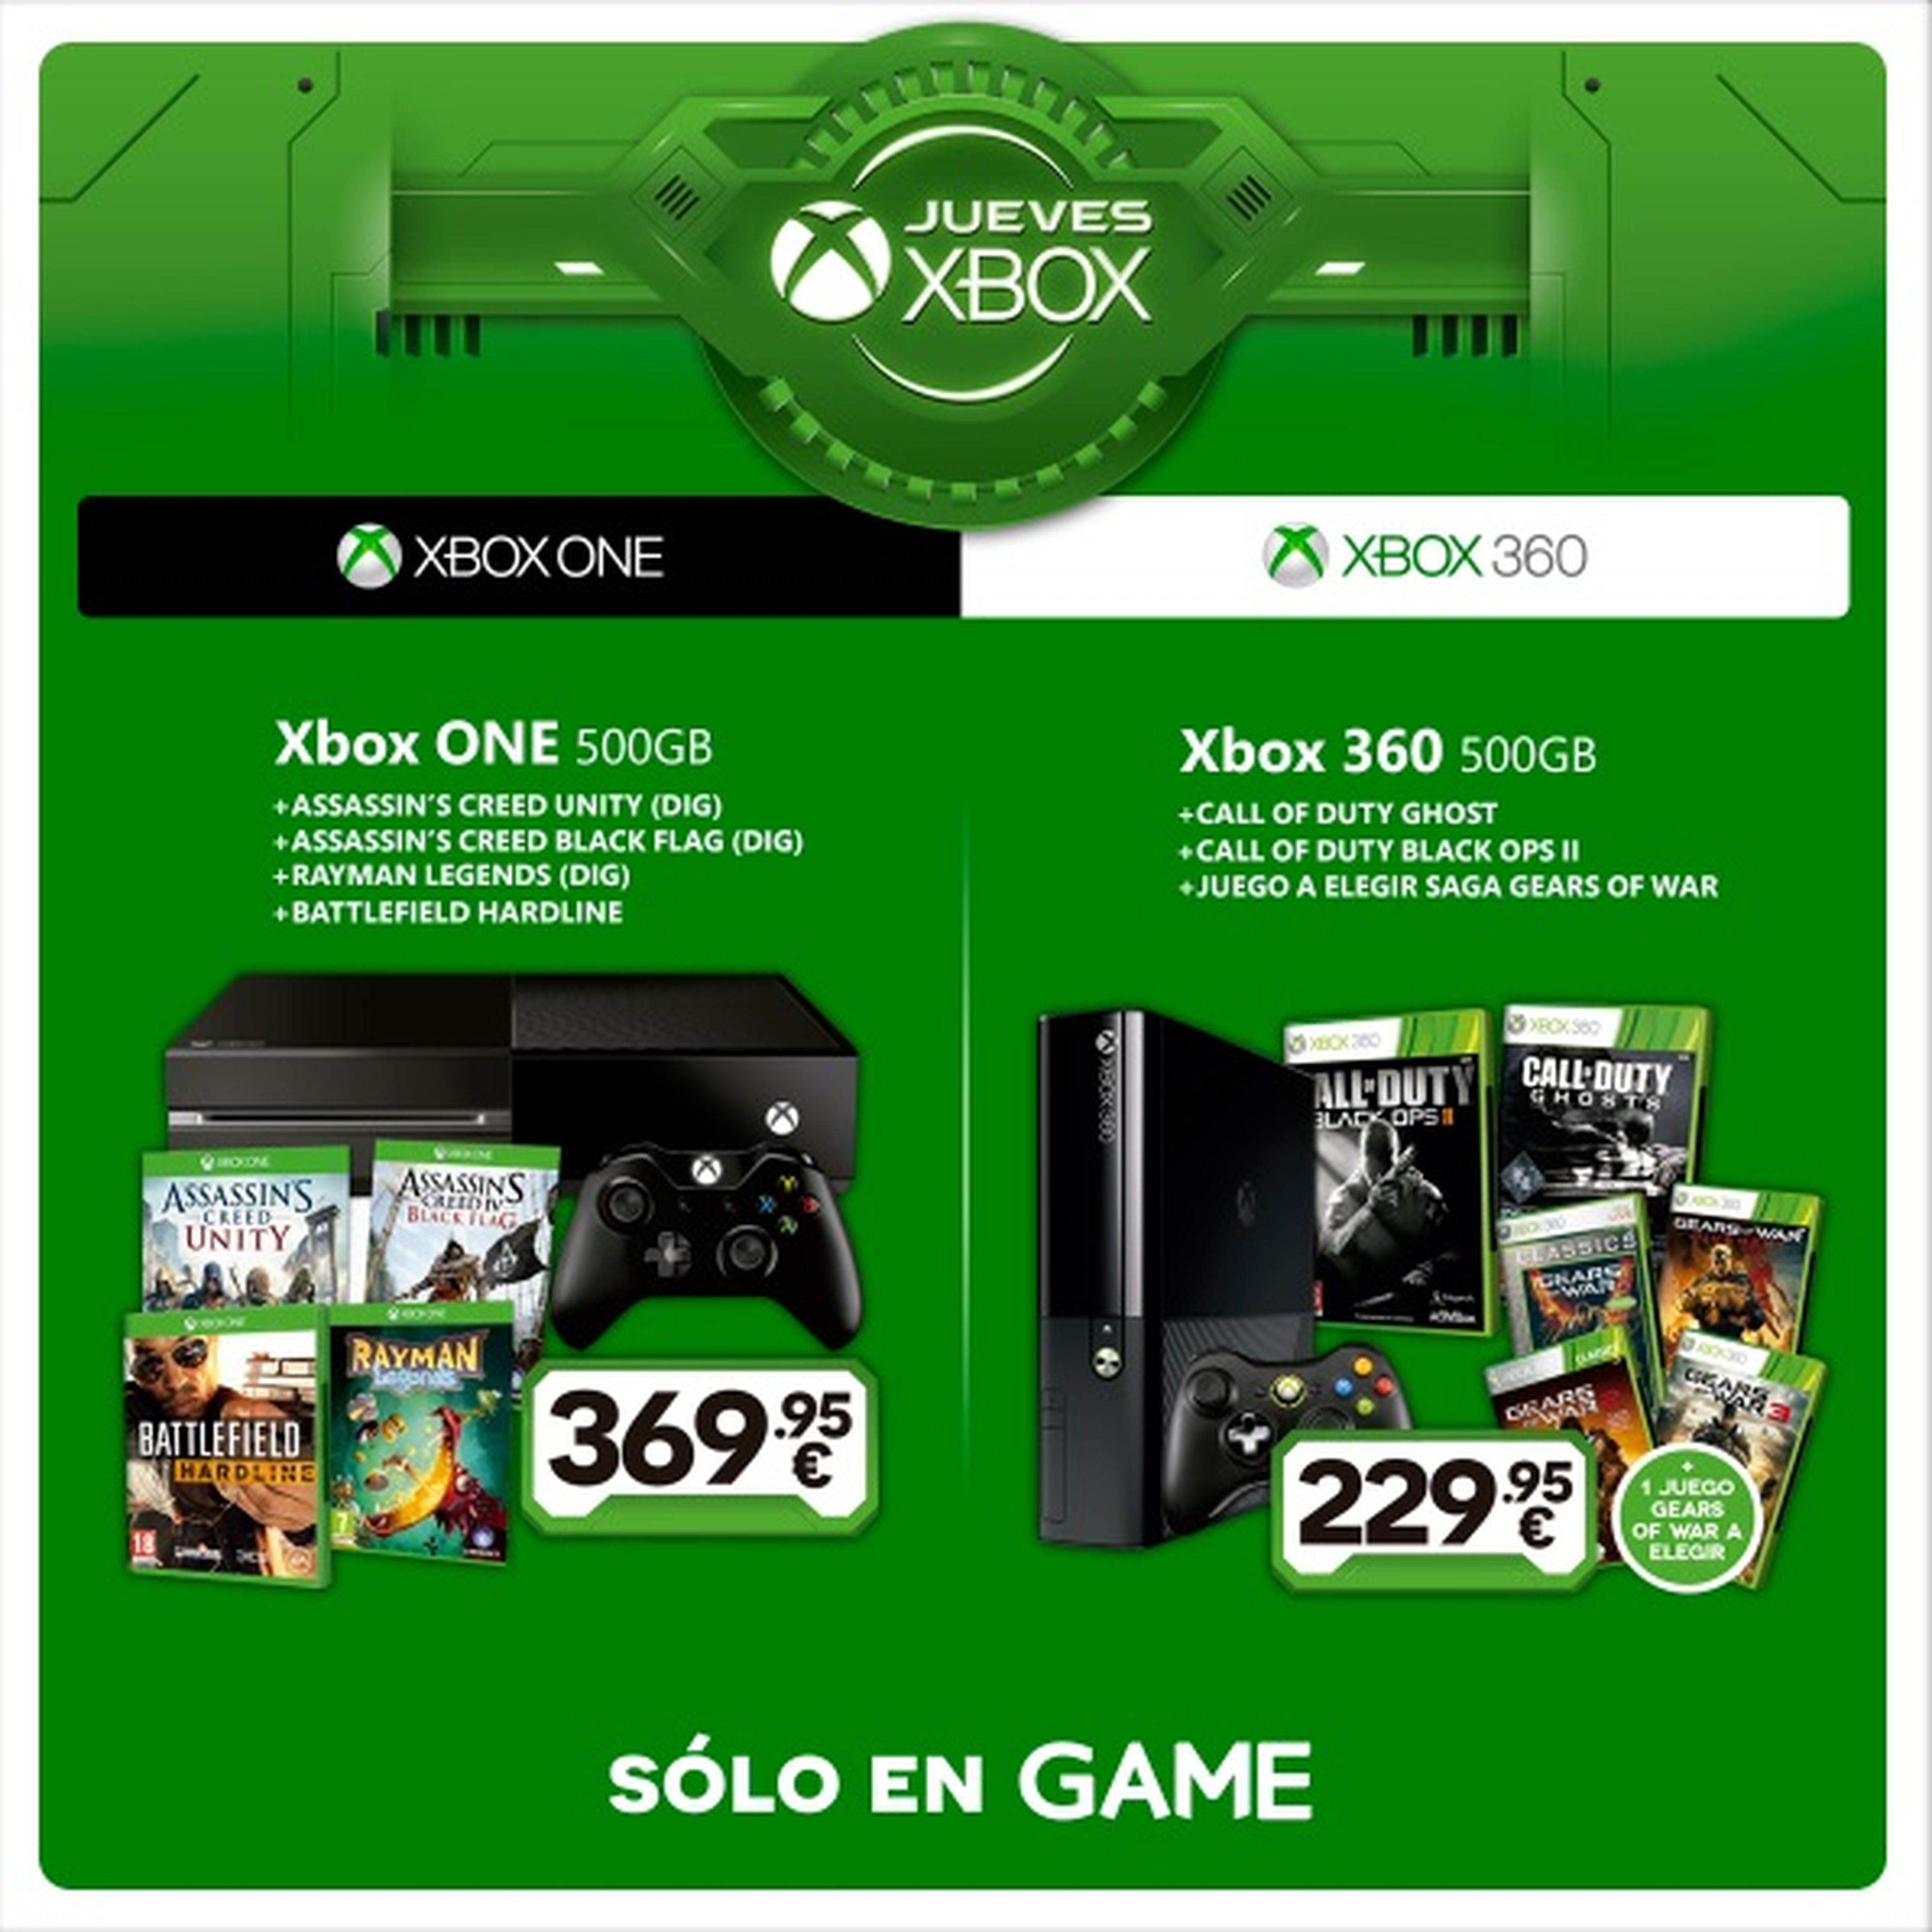 Jueves Xbox en GAME: tercera semana de ofertas